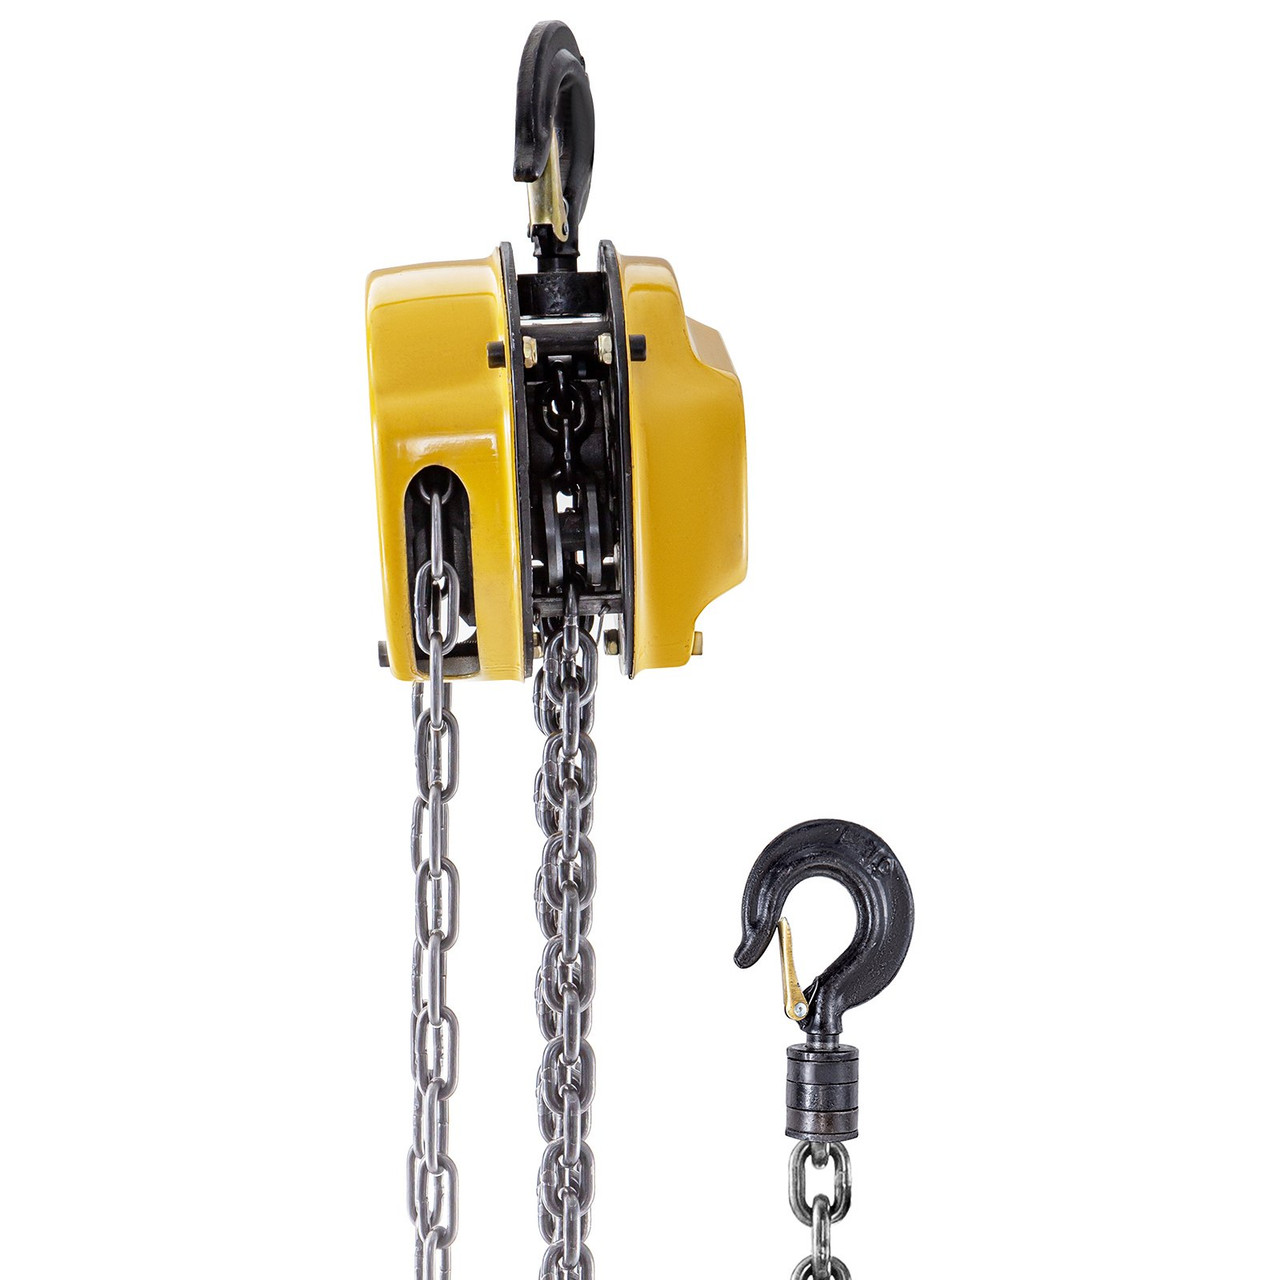 VEVOR Chain Hoist 1100lbs/0.5ton, Chain Block Hoist Manual Chain Hoist 10ft/3m Block Chain Hand Chain Lifting Hoist w/Two Hooks Chain Pulley Tackle Hoist Winch Lifting Pulling Equipment in Yellow